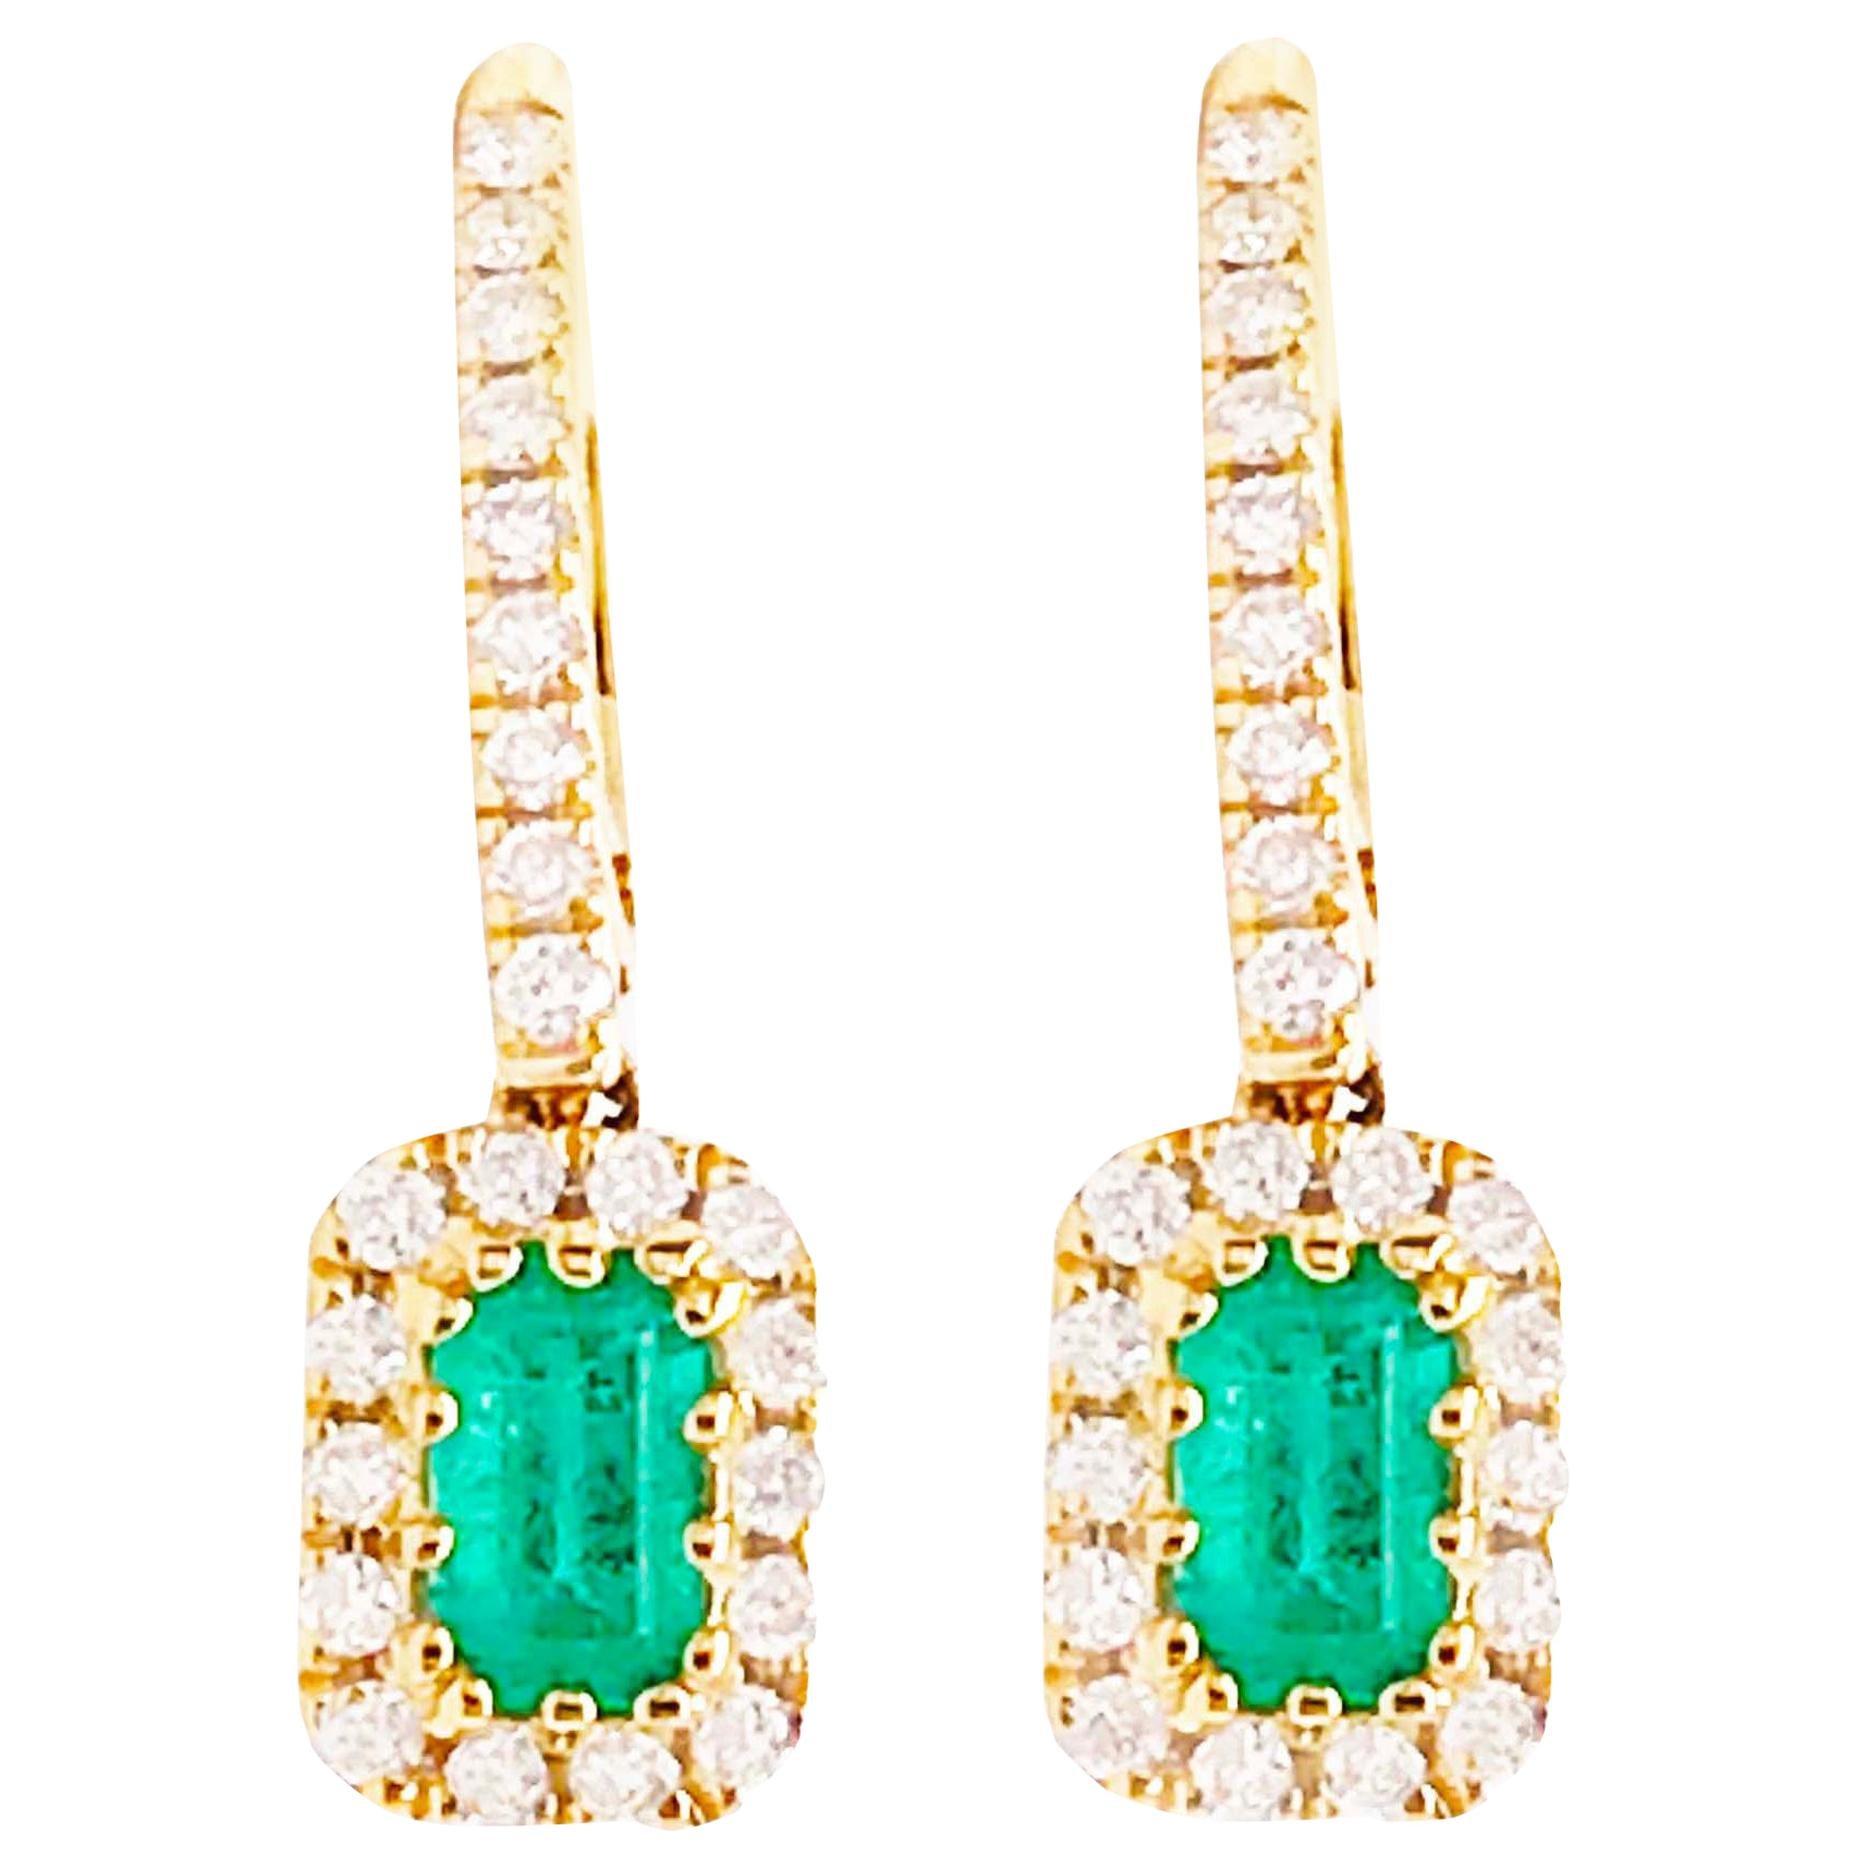 Original Emerald and Diamond Earring Dangles in 14 Karat Yellow Gold